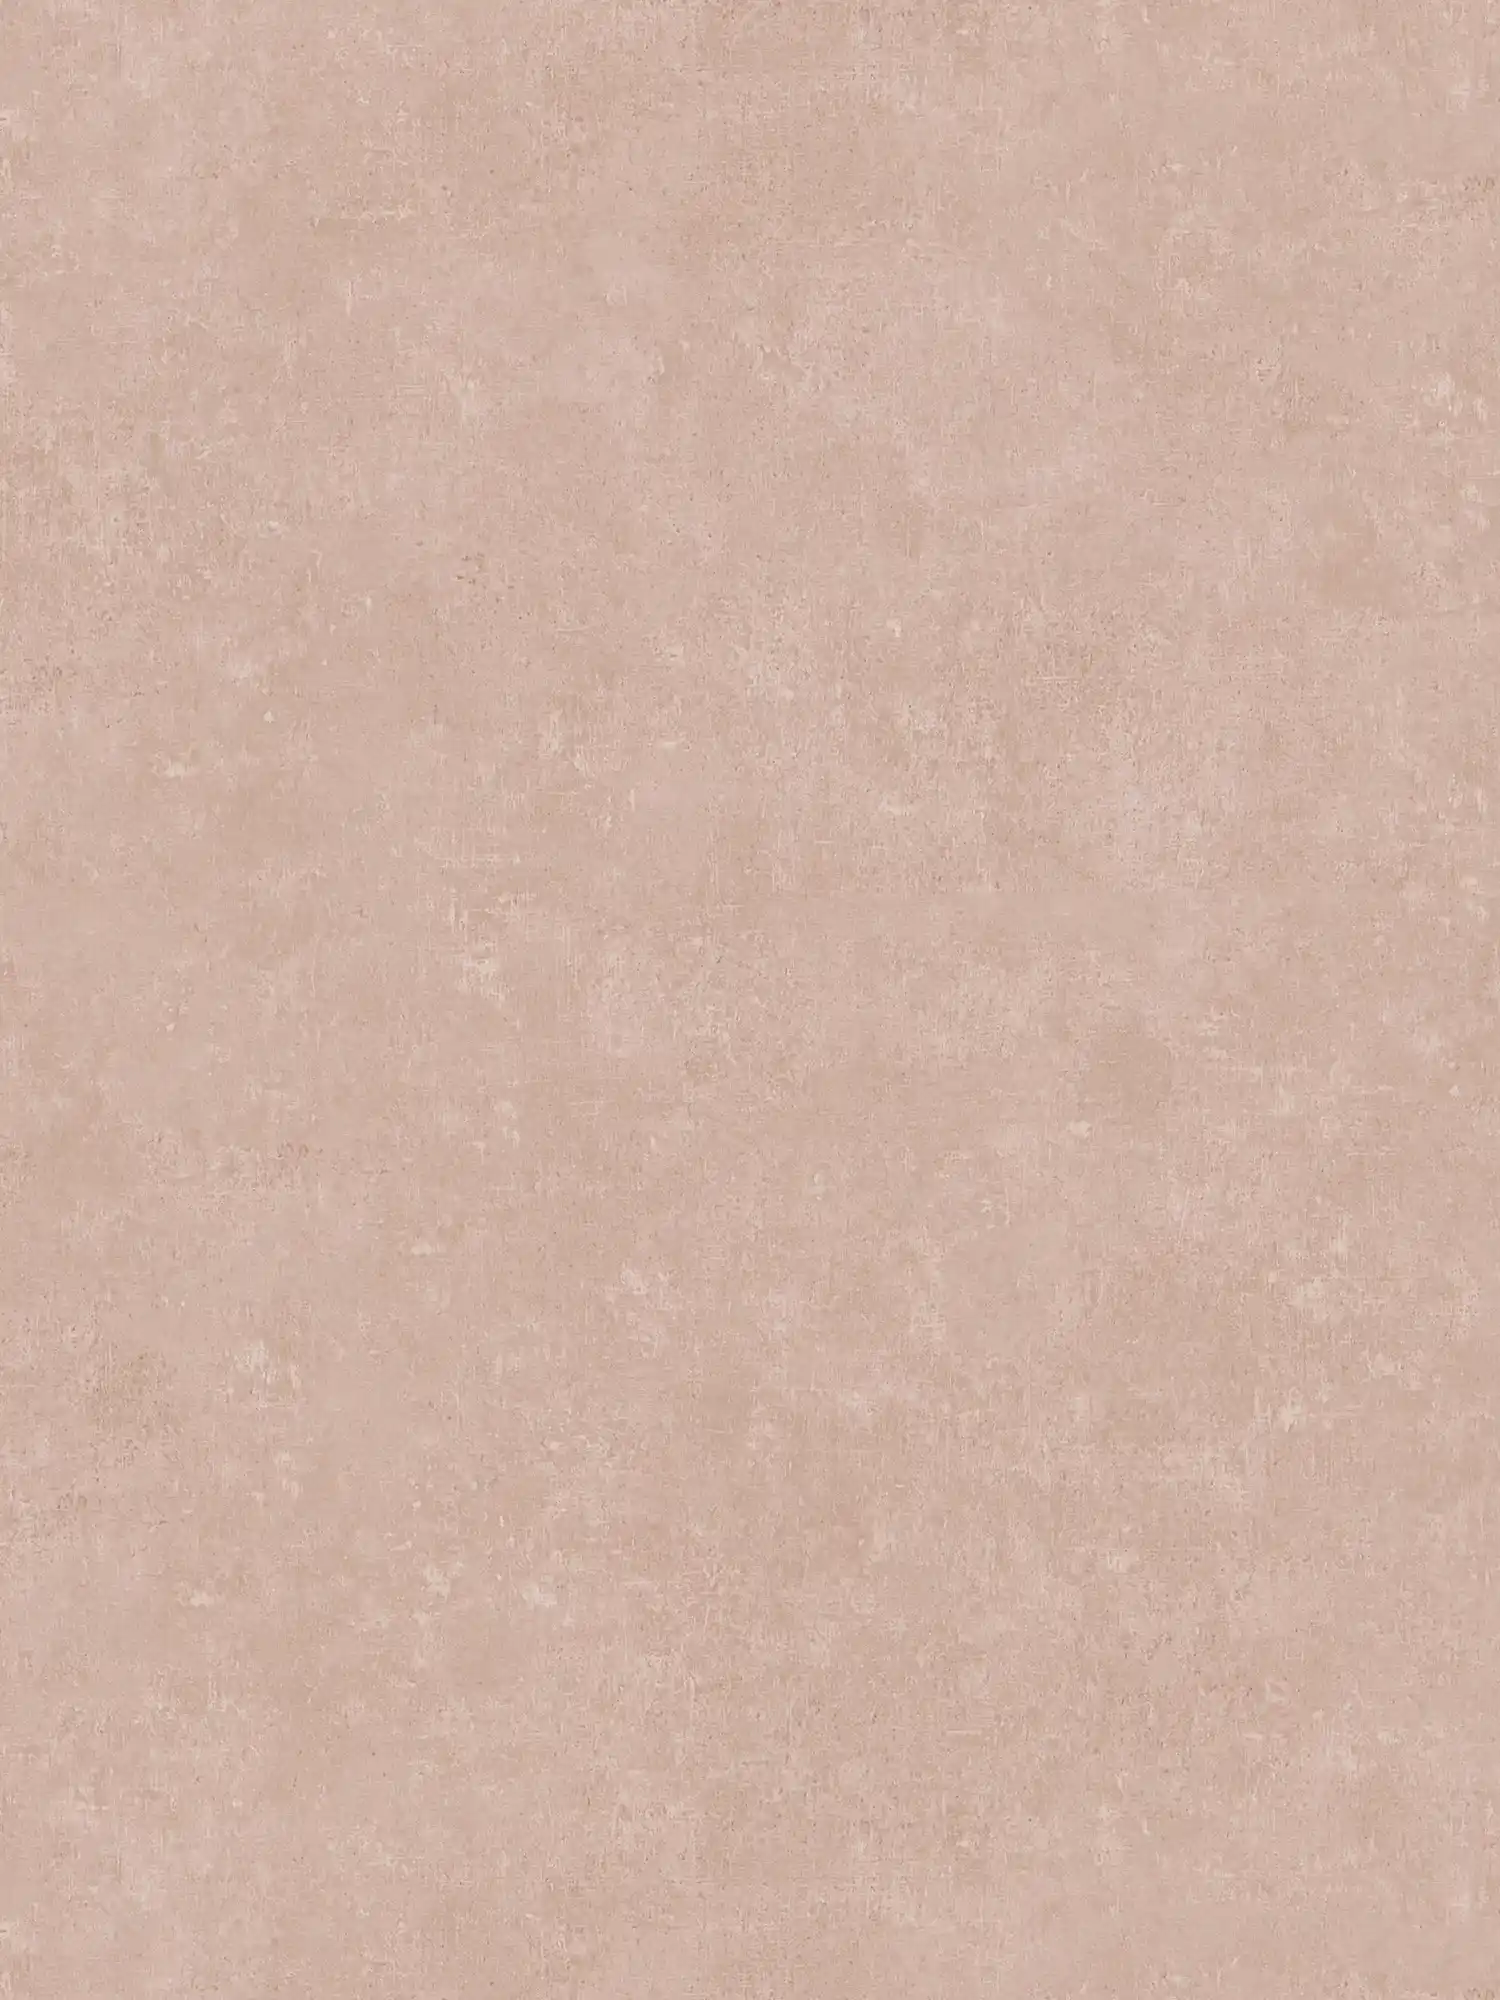 Papel pintado de tejido no tejido con diseño tono sobre tono, aspecto usado - rosa
